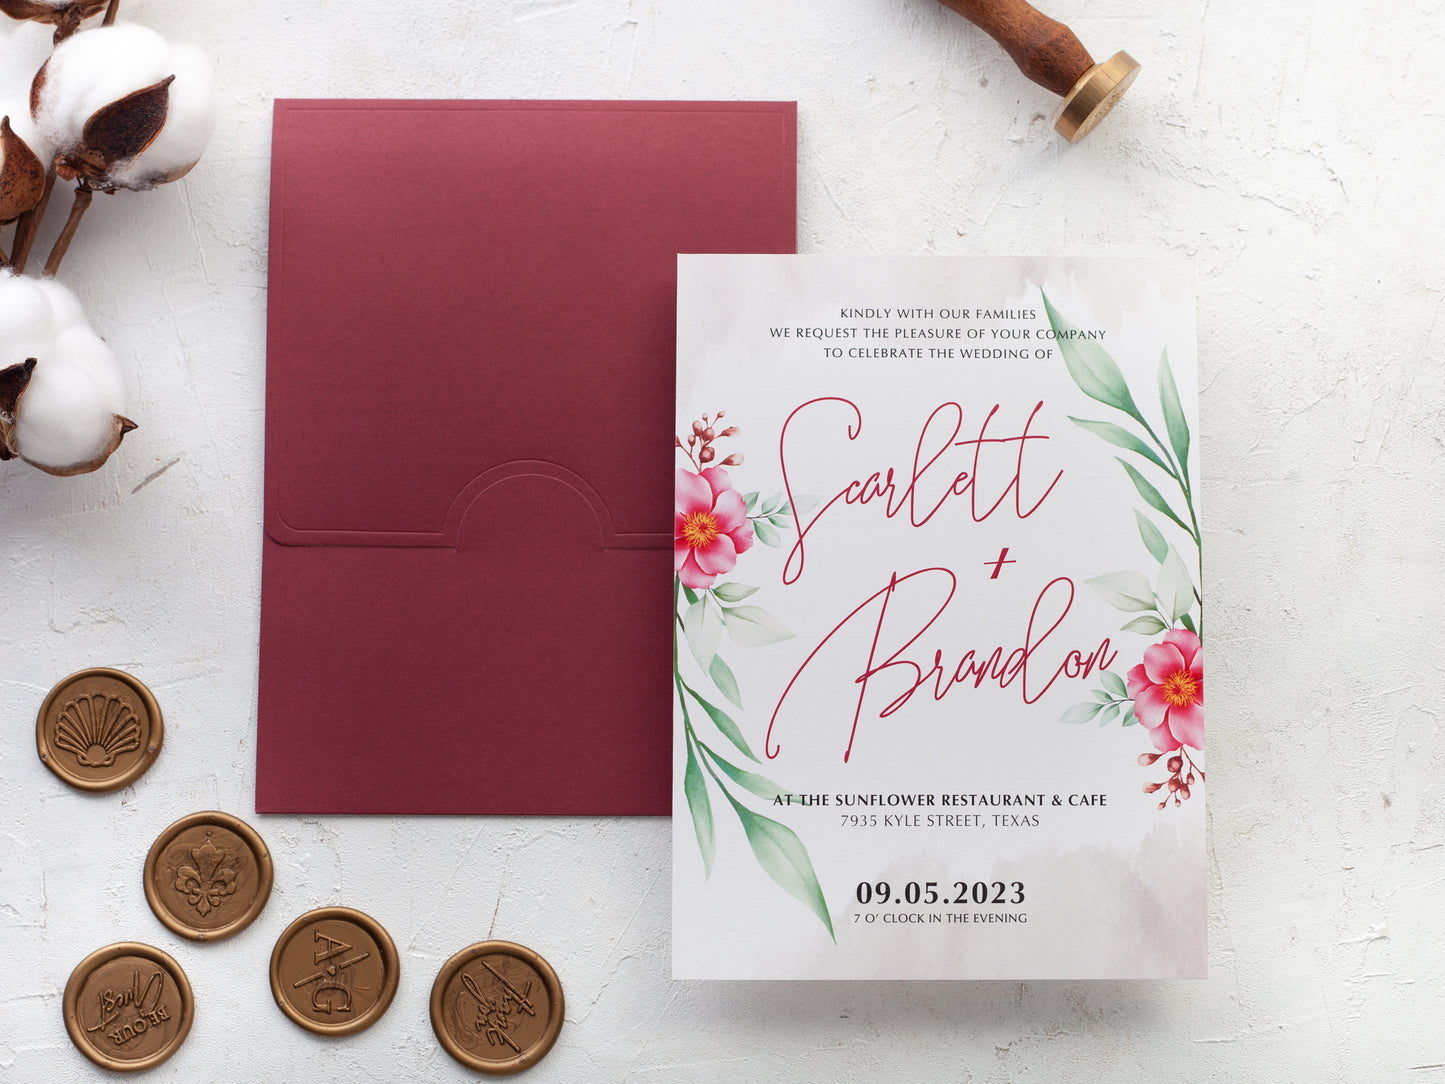 Floral wedding invitation with burgundy envelope